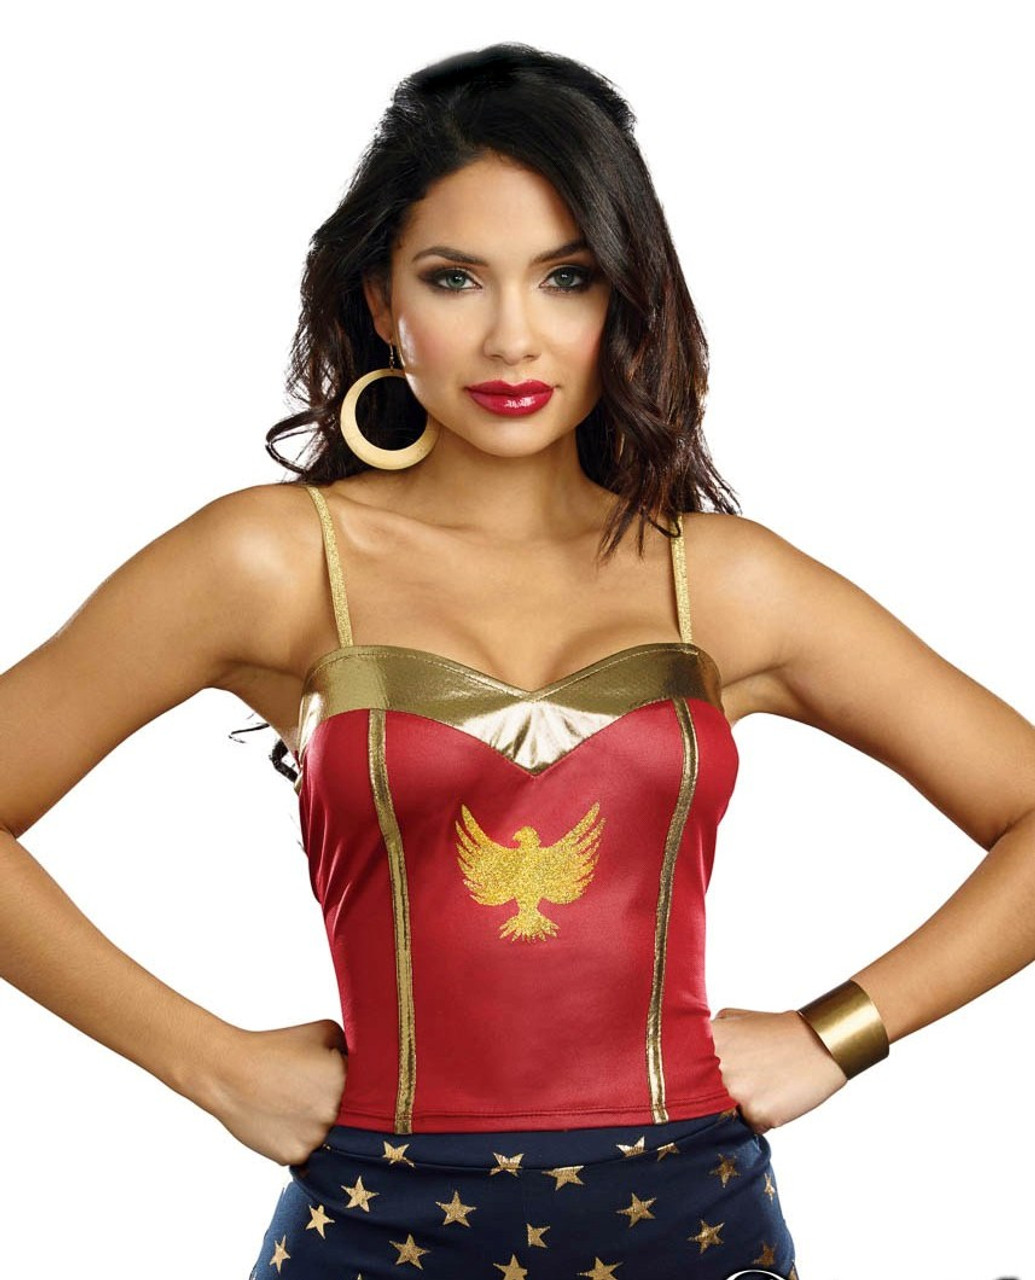 Women’s Romper Wonder Woman Costume - Medium